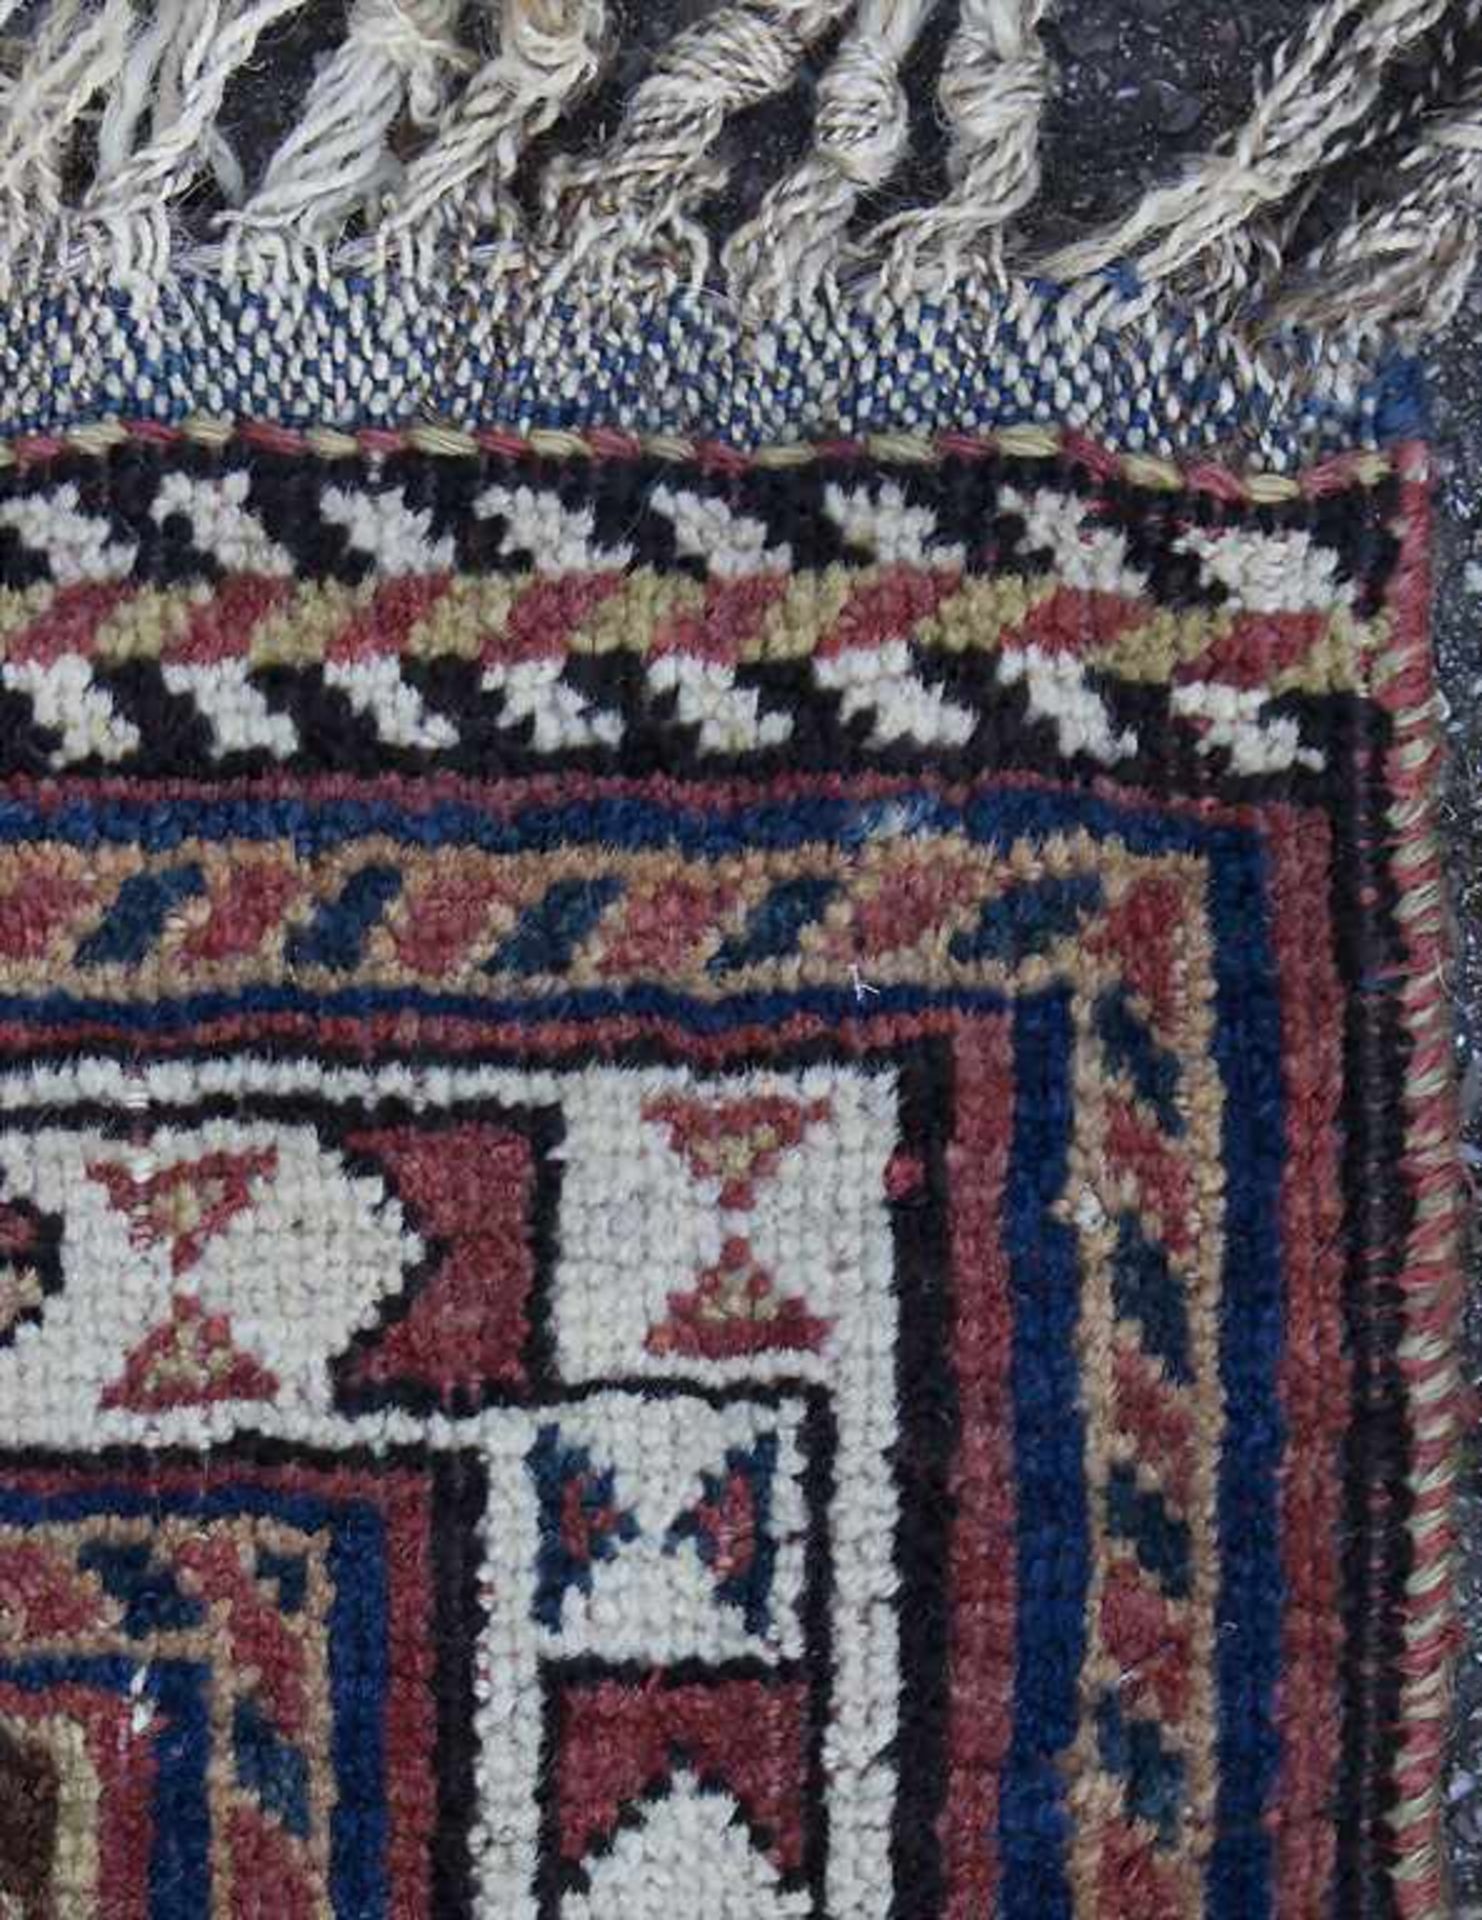 Orientteppich / An oriental carpetMaterial: Wolle auf Wolle, Maße: 238 x 145 cm, Zustand: gut, - Image 3 of 5